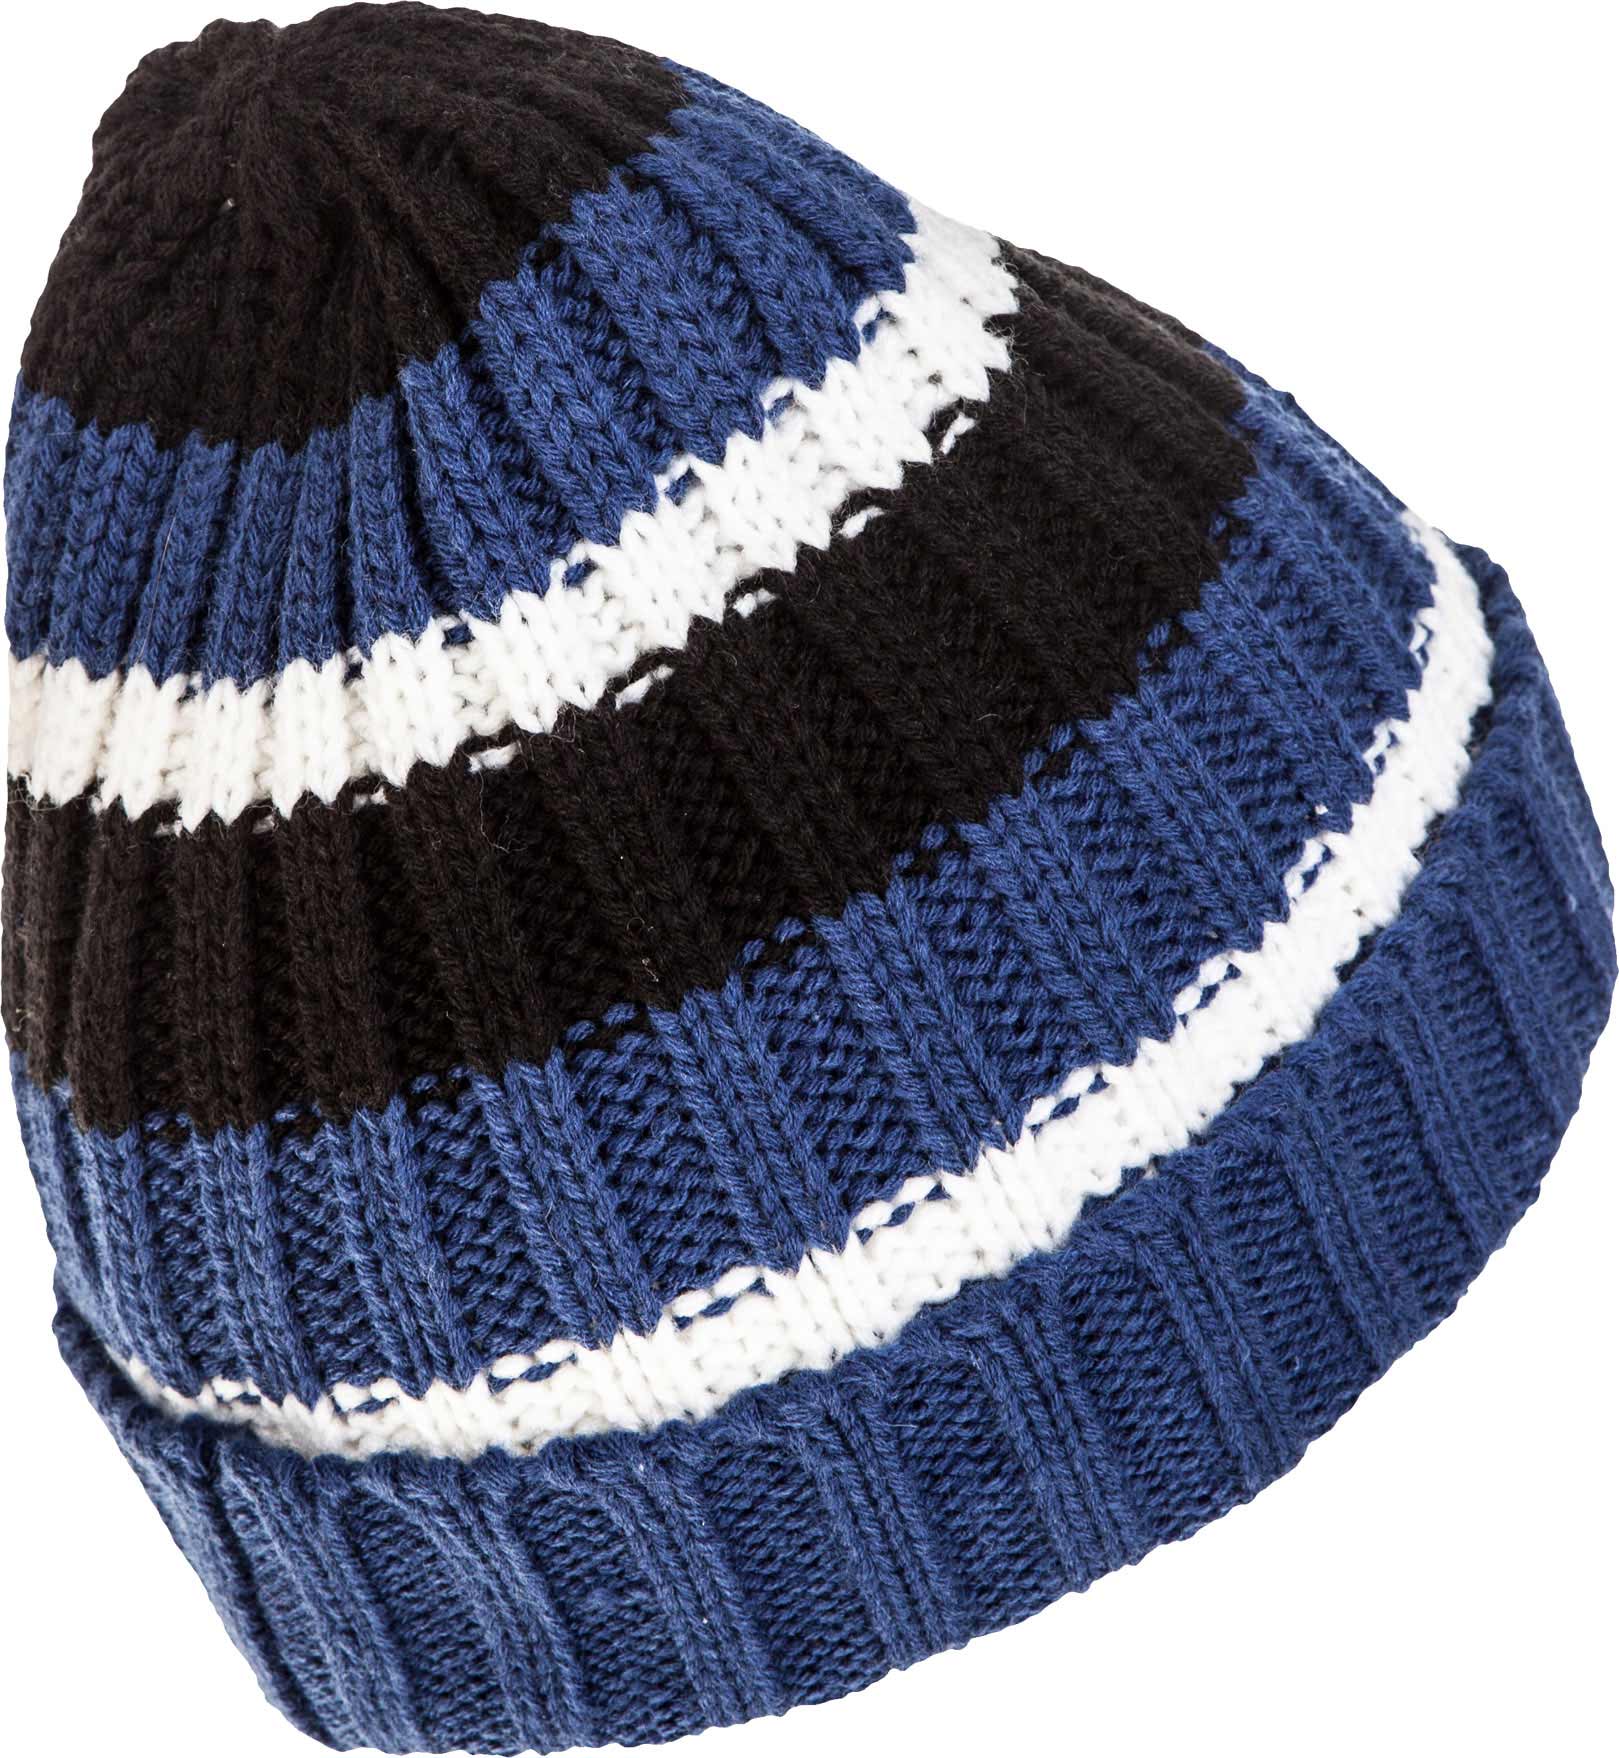 ALON JUNIOR - Children's knitted cap